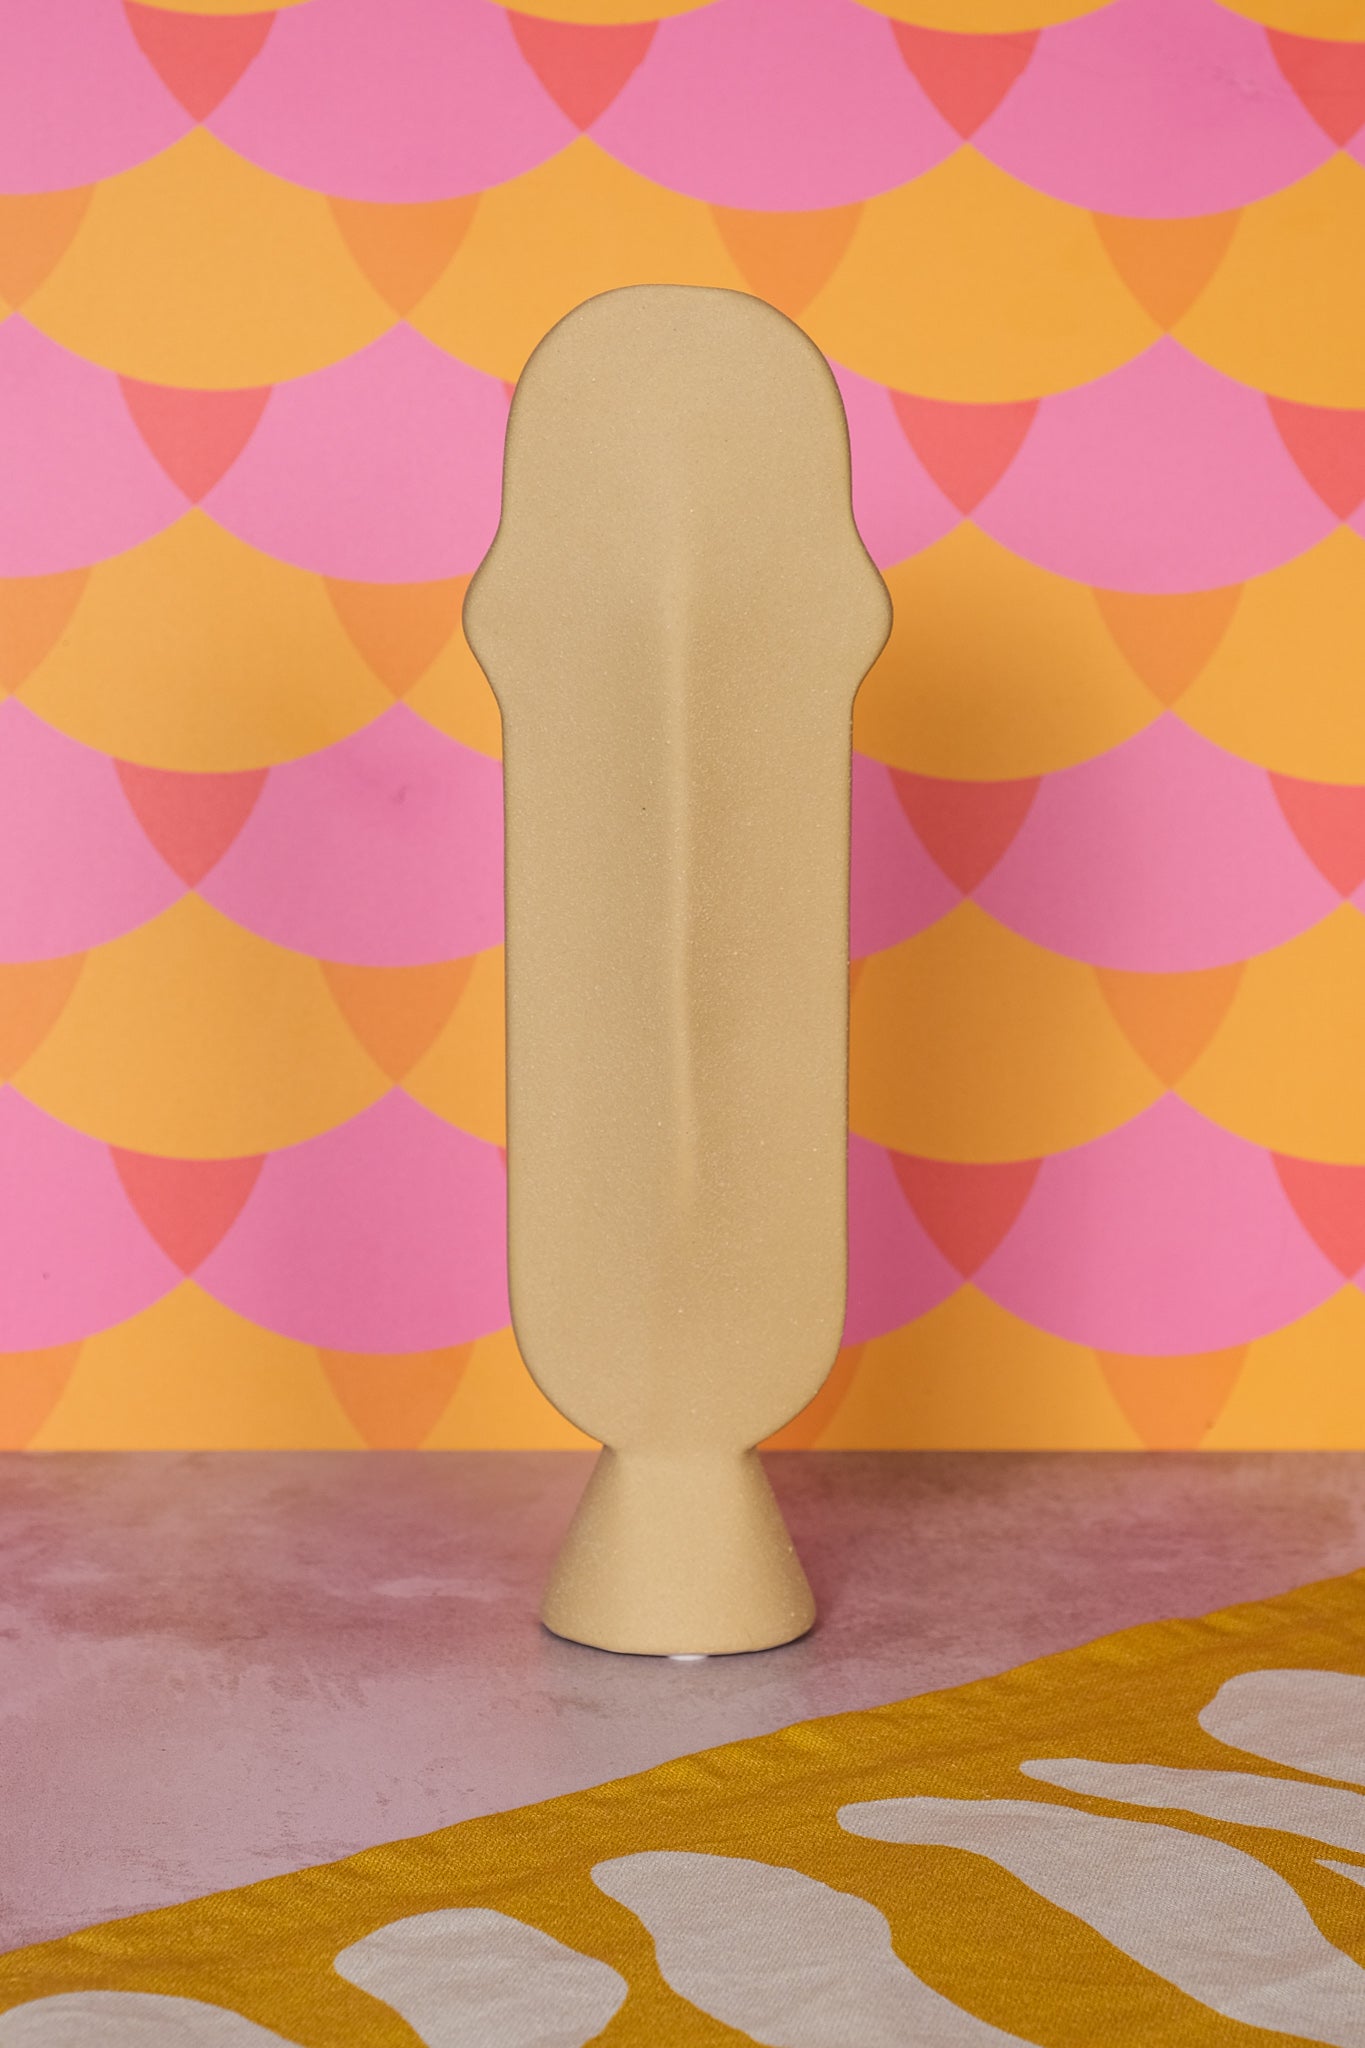 Normandy Tall Ceramic Vase (29,5cm)